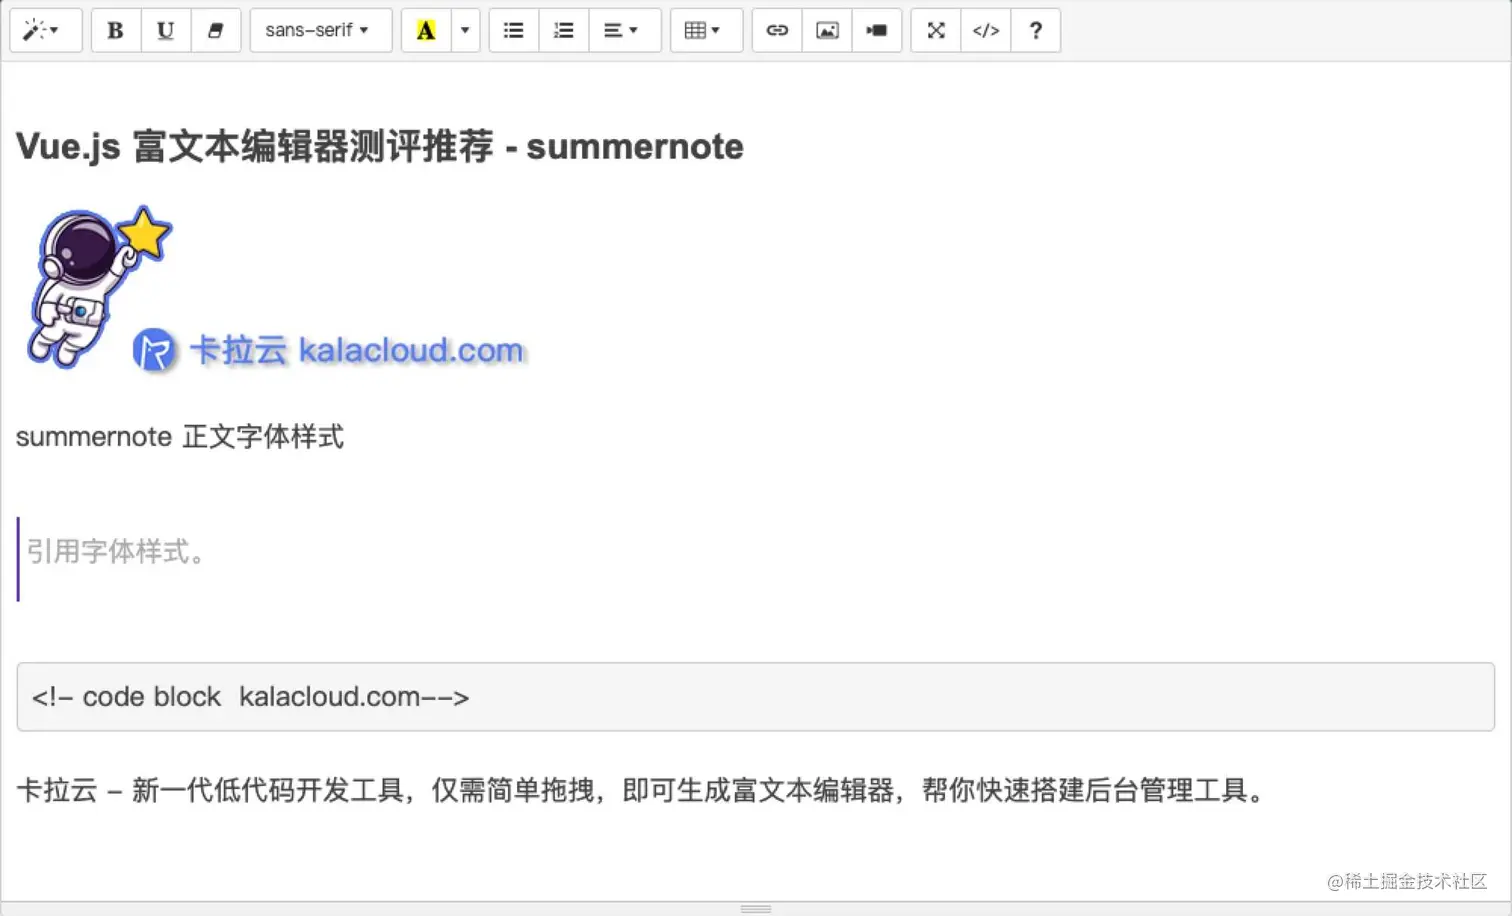 summernote